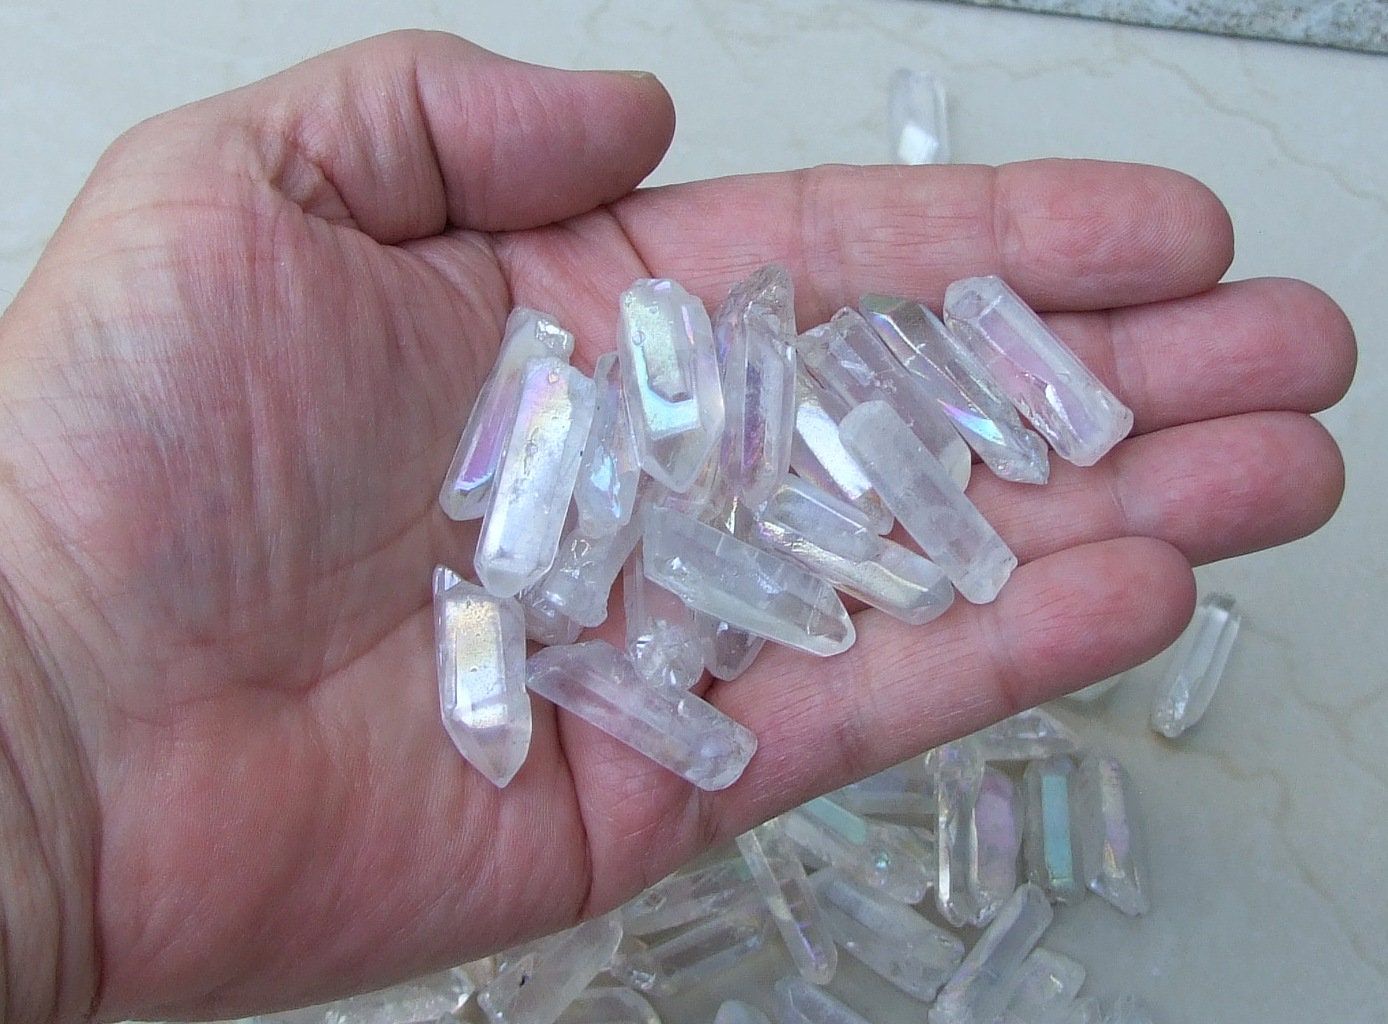 15 Small Angel Aura Quartz Crystals Points, Lightly Polished Undrilled, Titanium Quartz, Gemstone Beads, Wand, Healing Quartz, 28-32mm